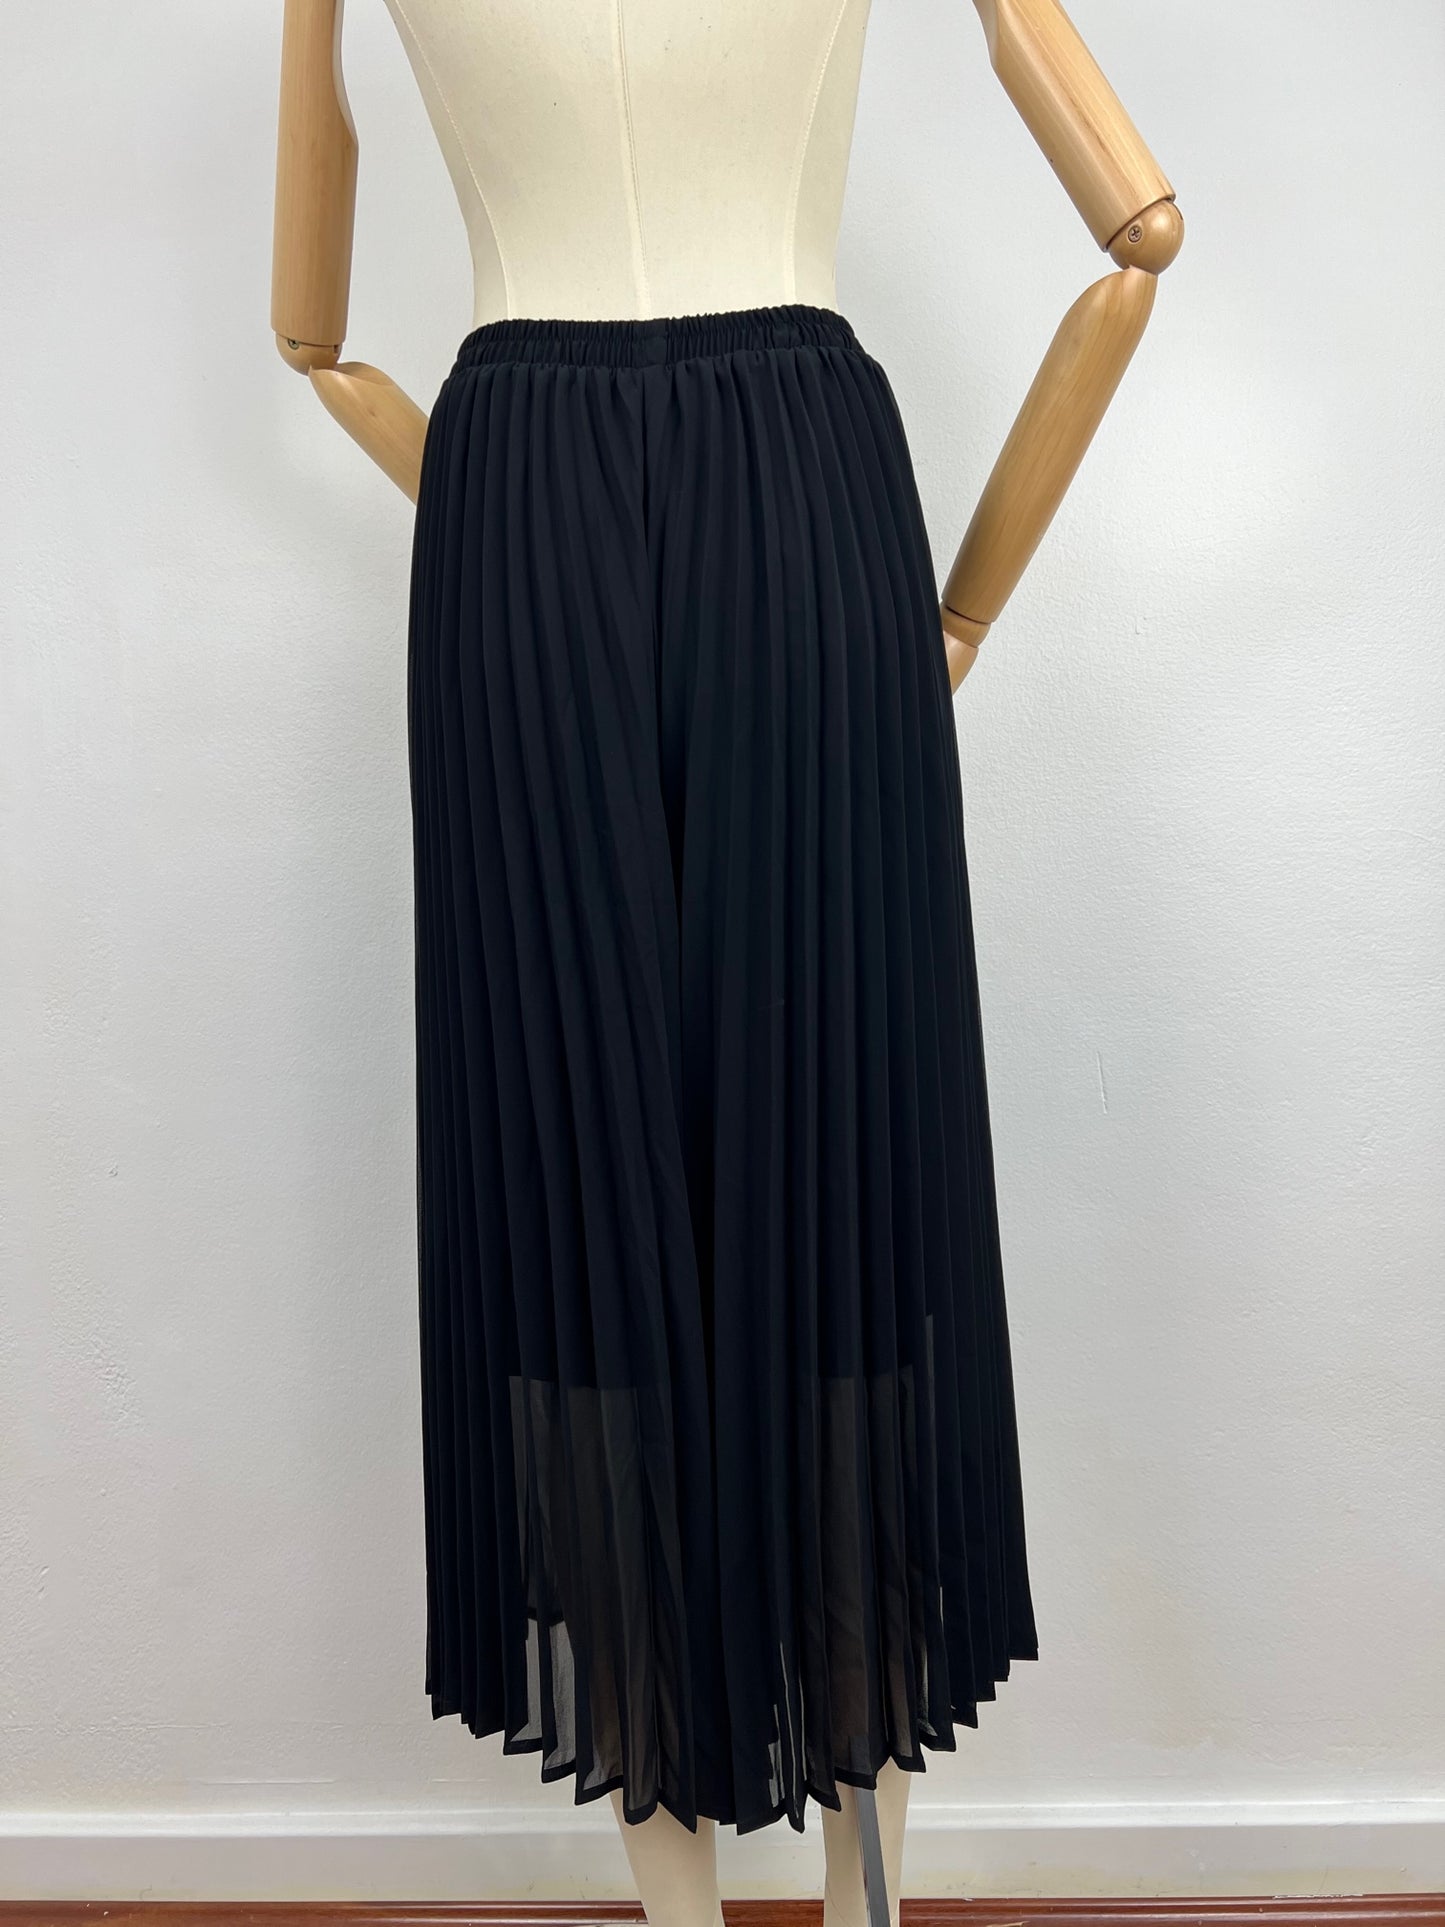 XW20240-1SS Pleated Chiffon Skirt Pant - On Sale